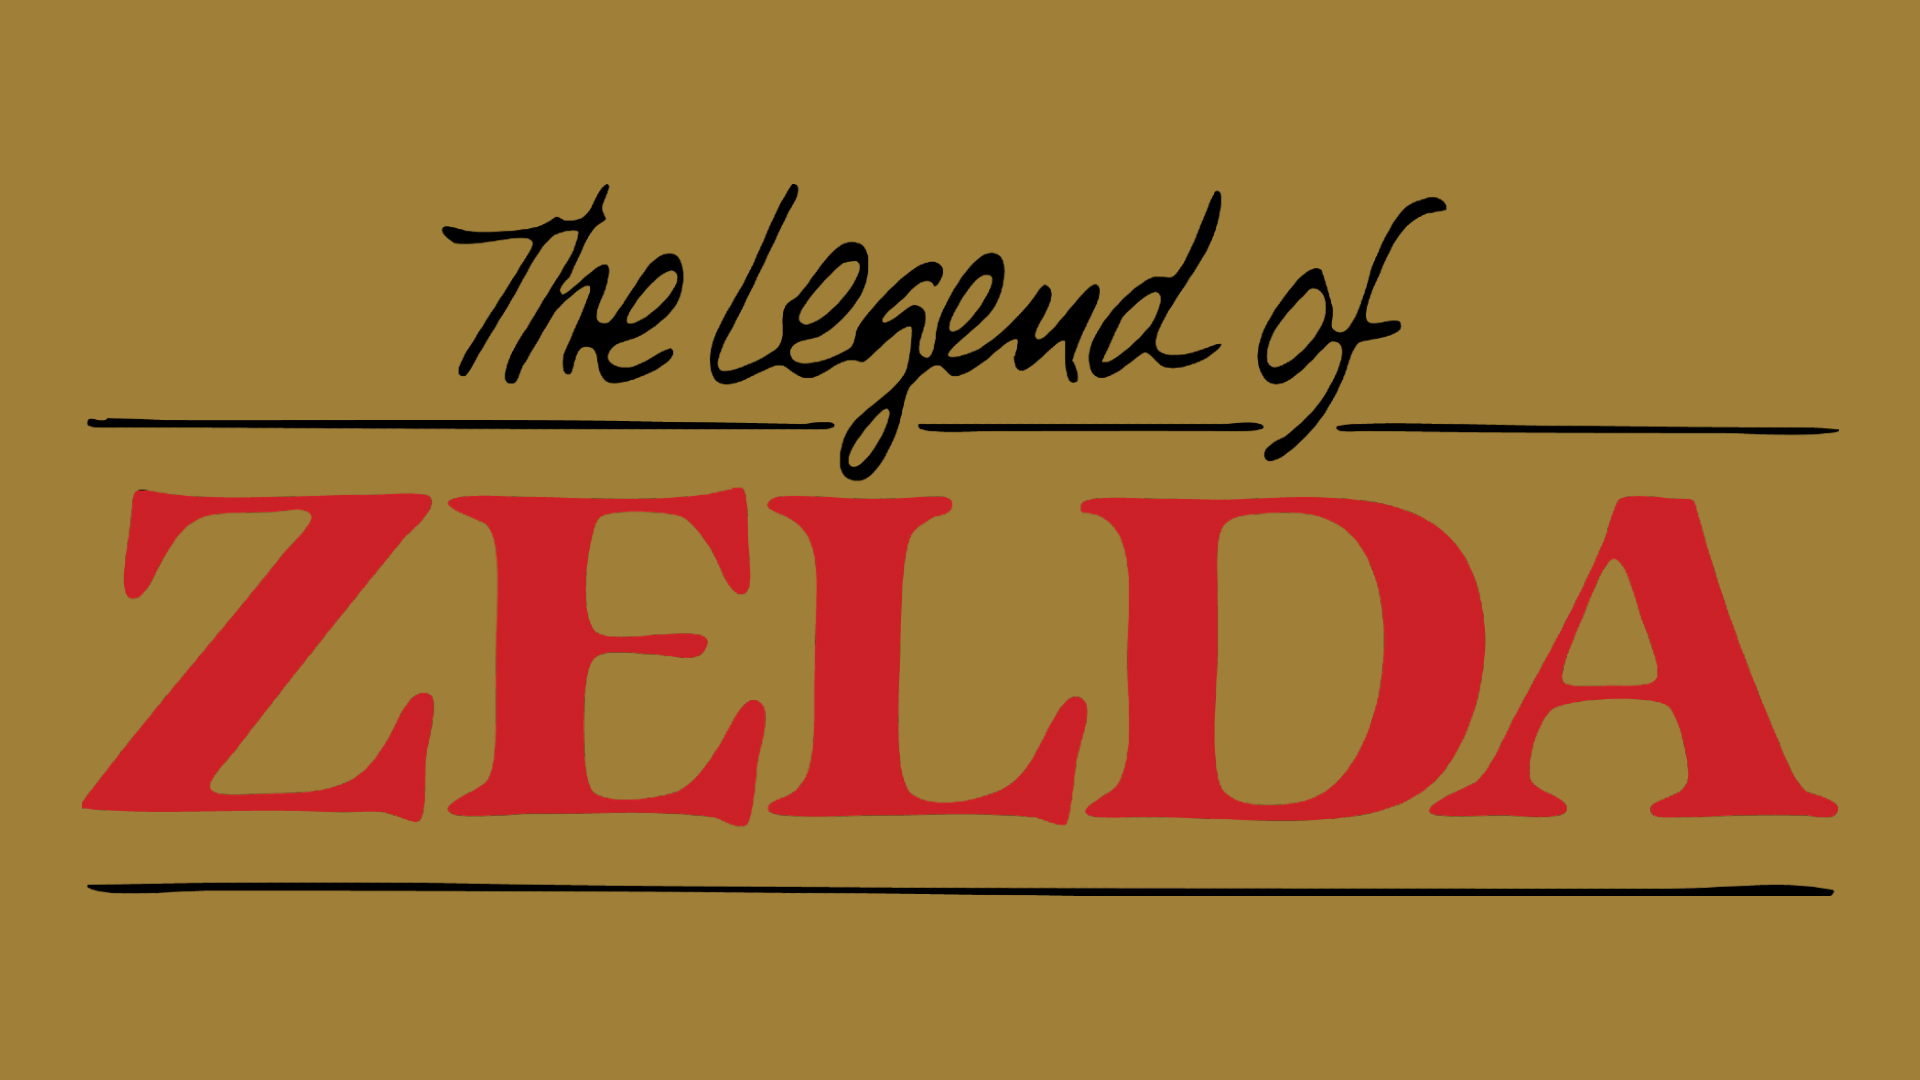 The Legend of Zelda Logo